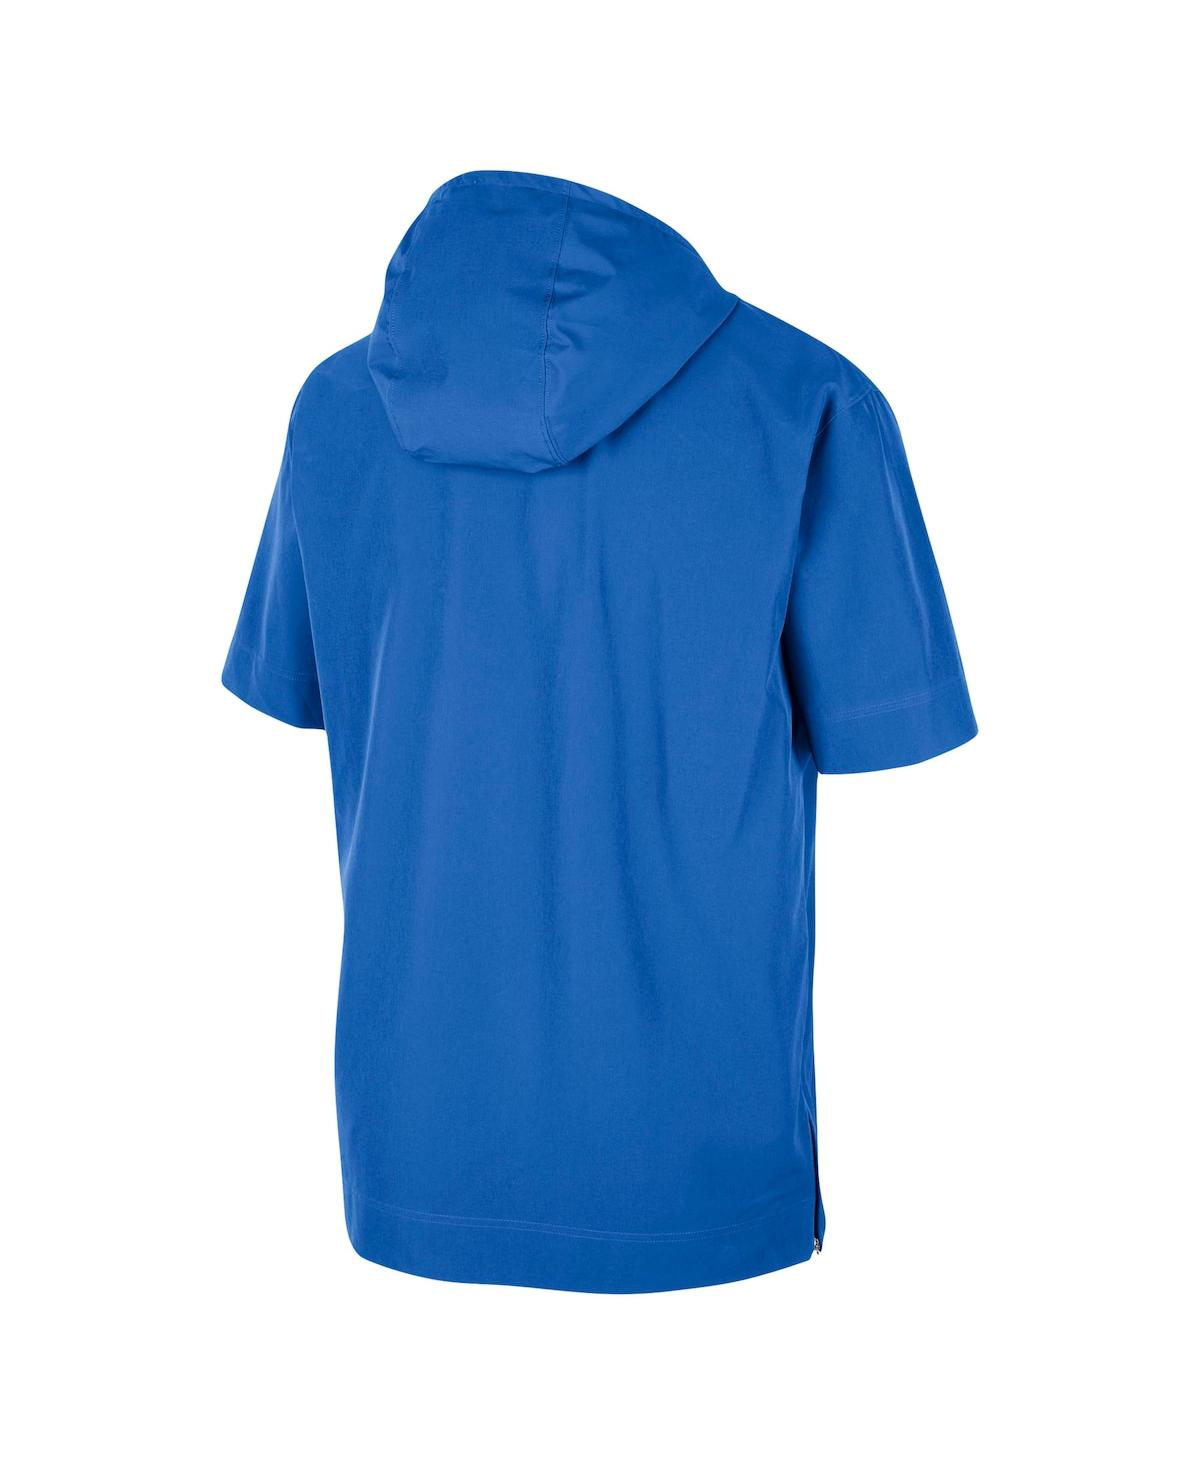 Shop Nike Men's  Blue Ucla Bruins Coaches Quarter-zip Short Sleeve Jacket